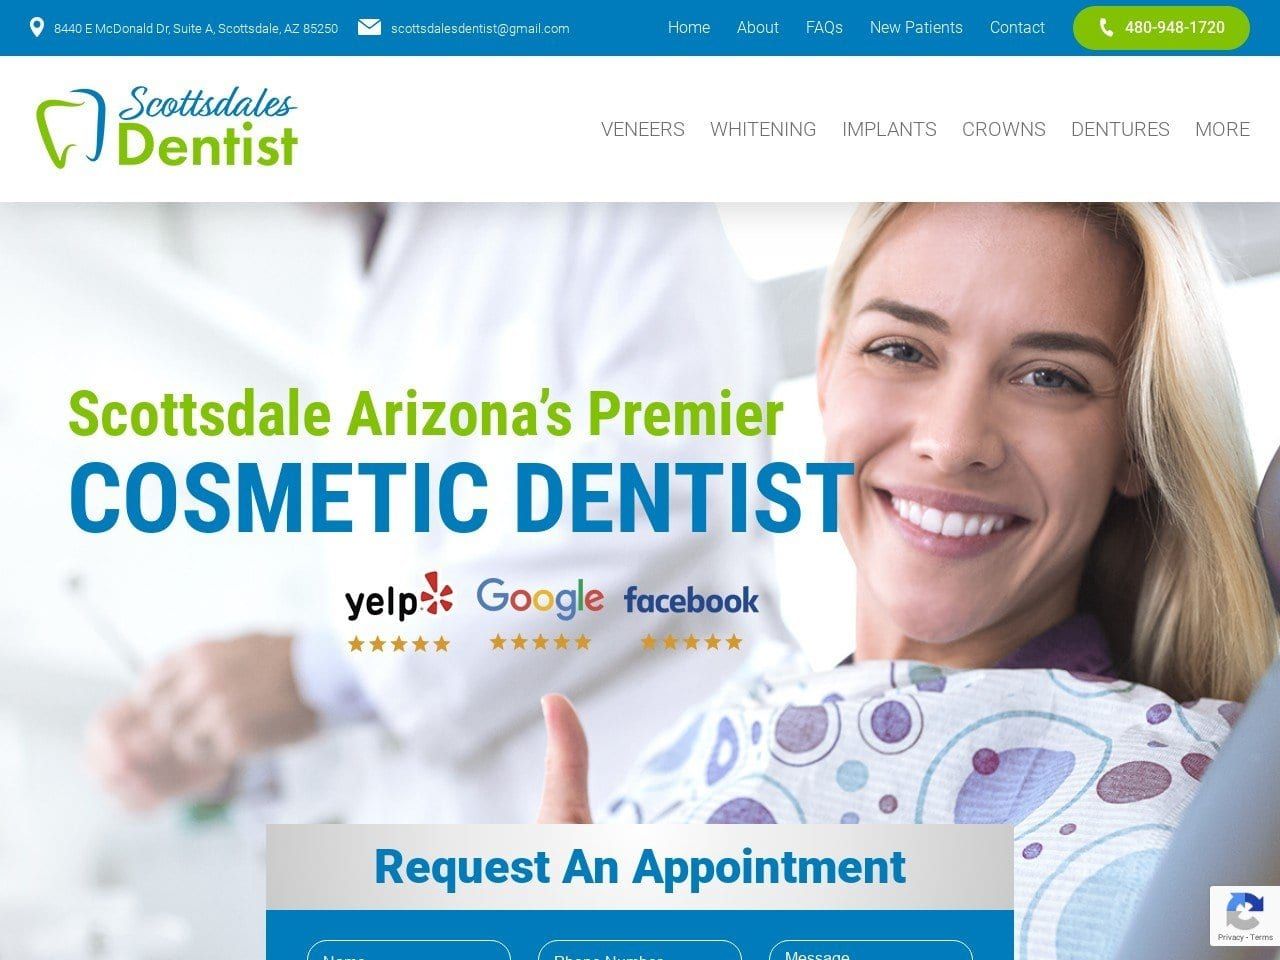 Scottsdales Dentist Website Screenshot from scottsdalesdentist.com